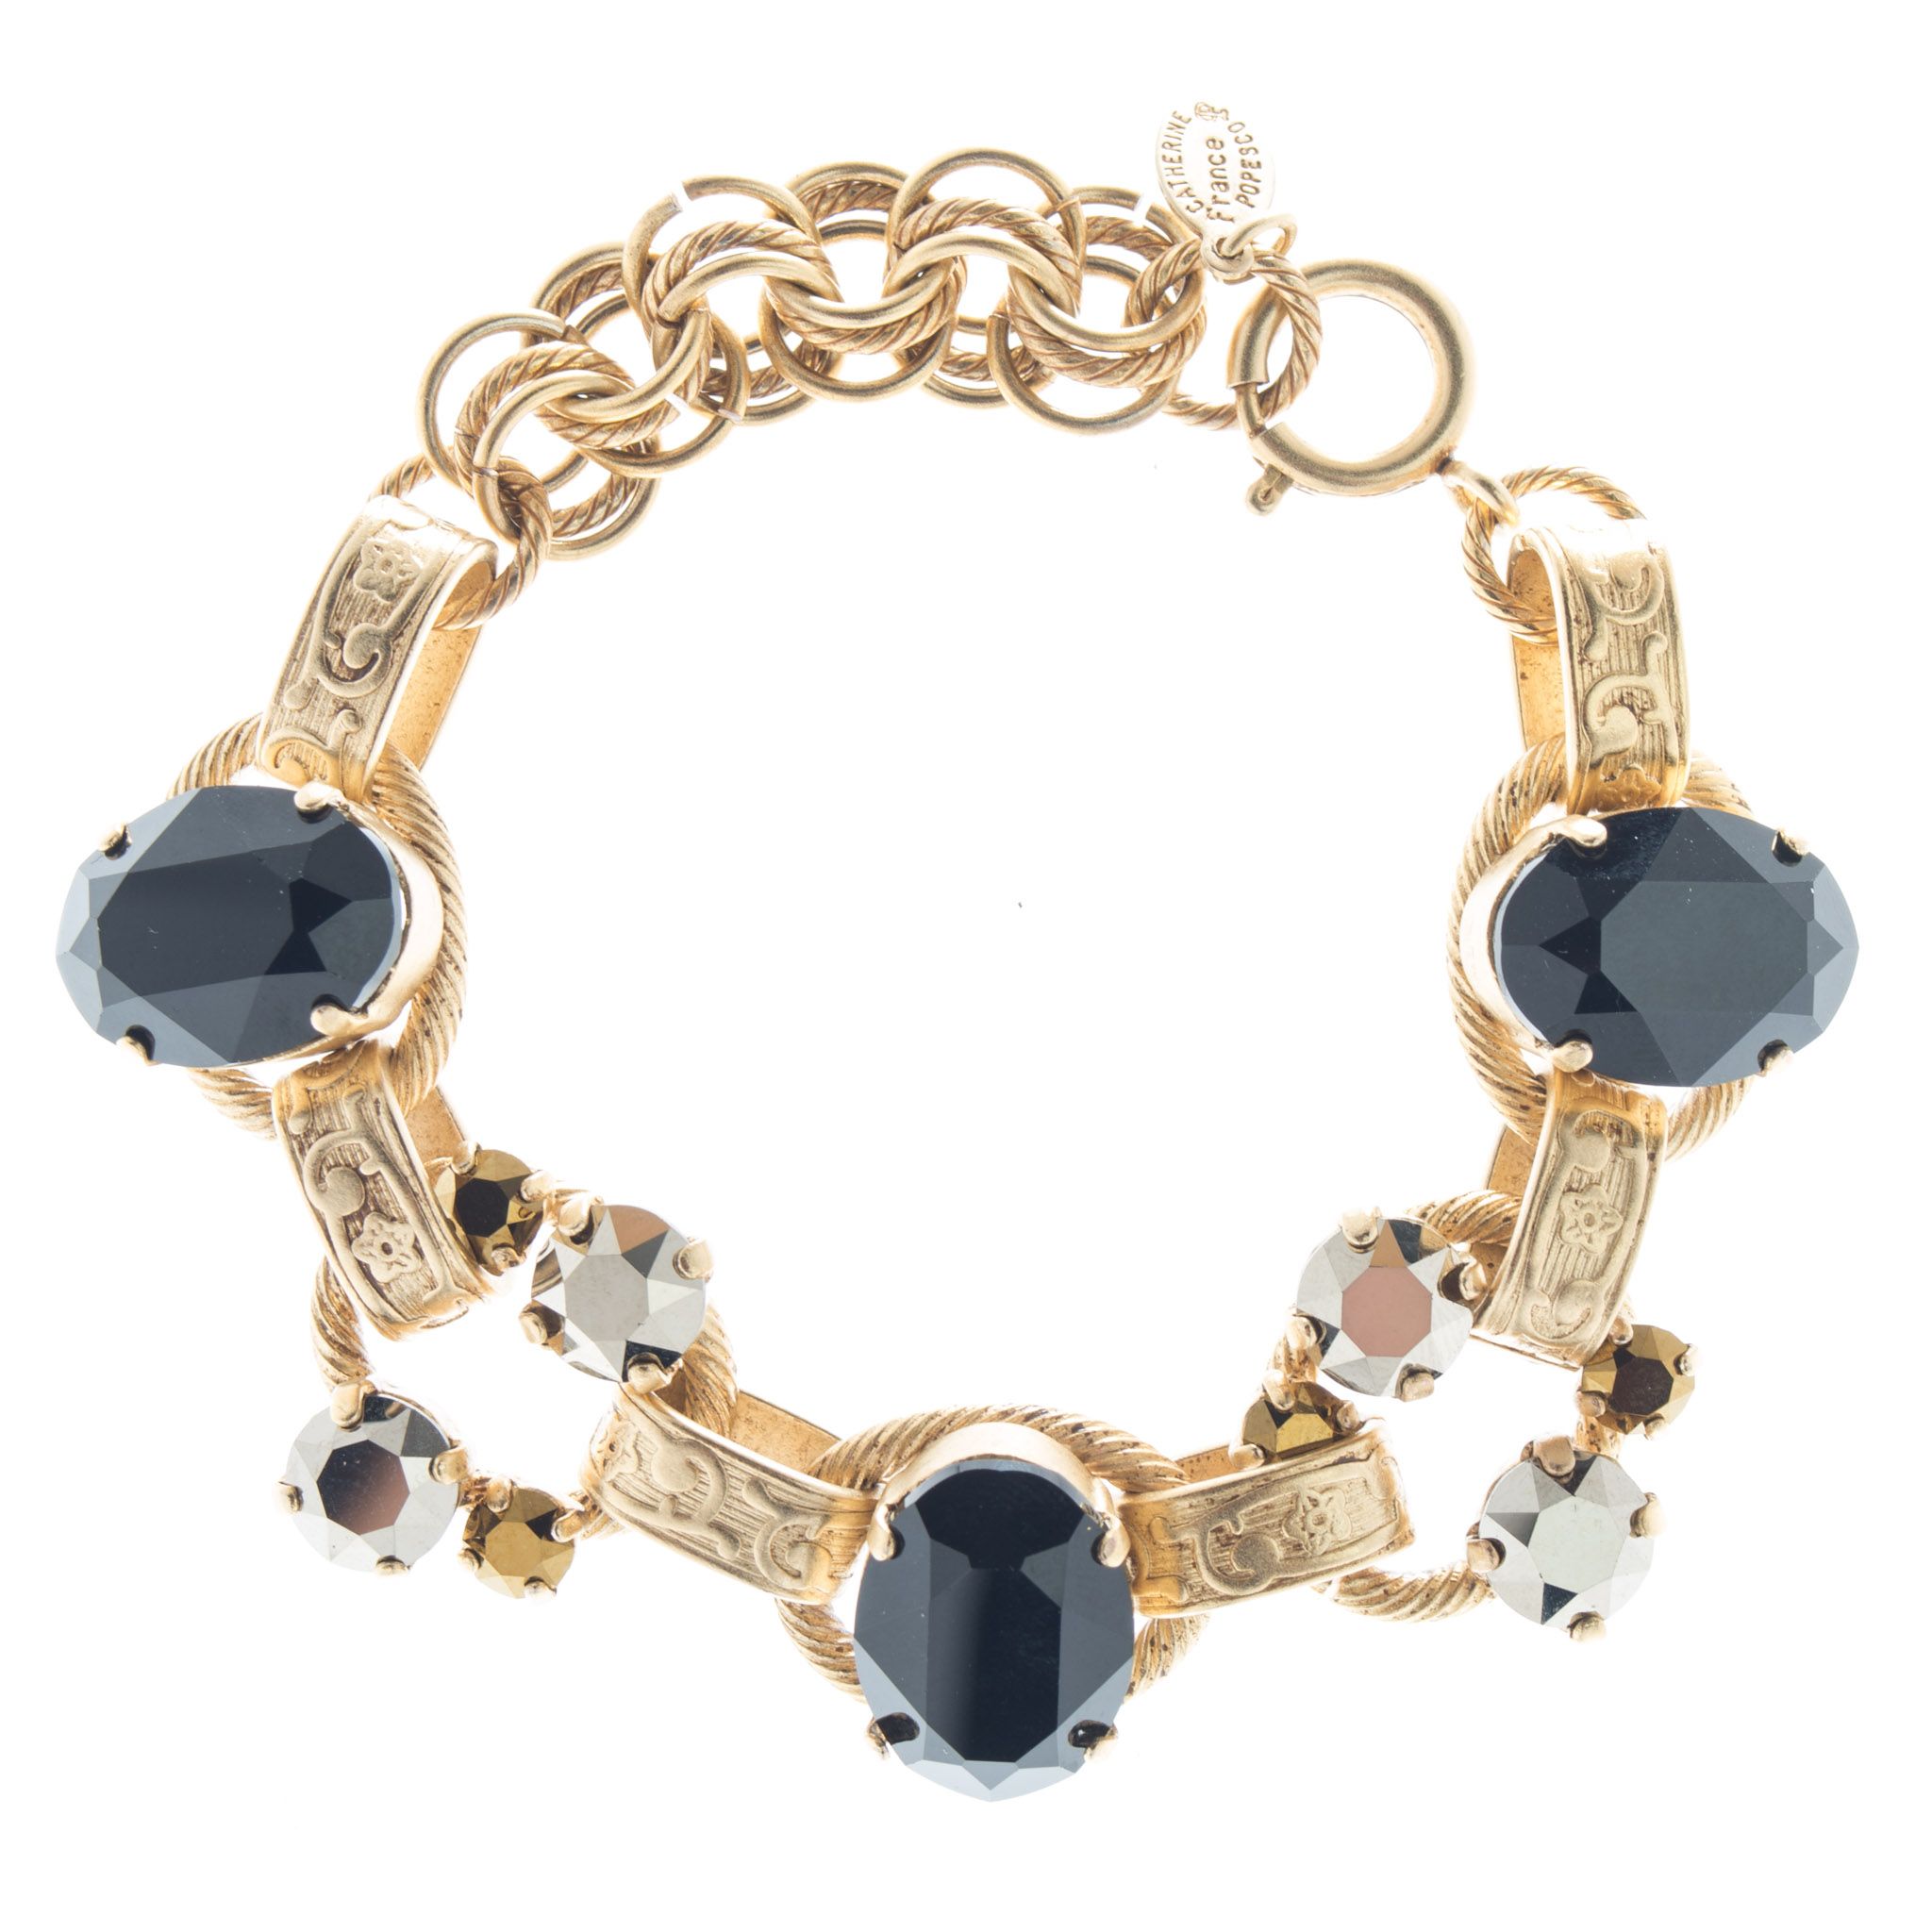 Catherine Popesco Oval Stone Ornate Bracelet with Crystals - Jet Dorado